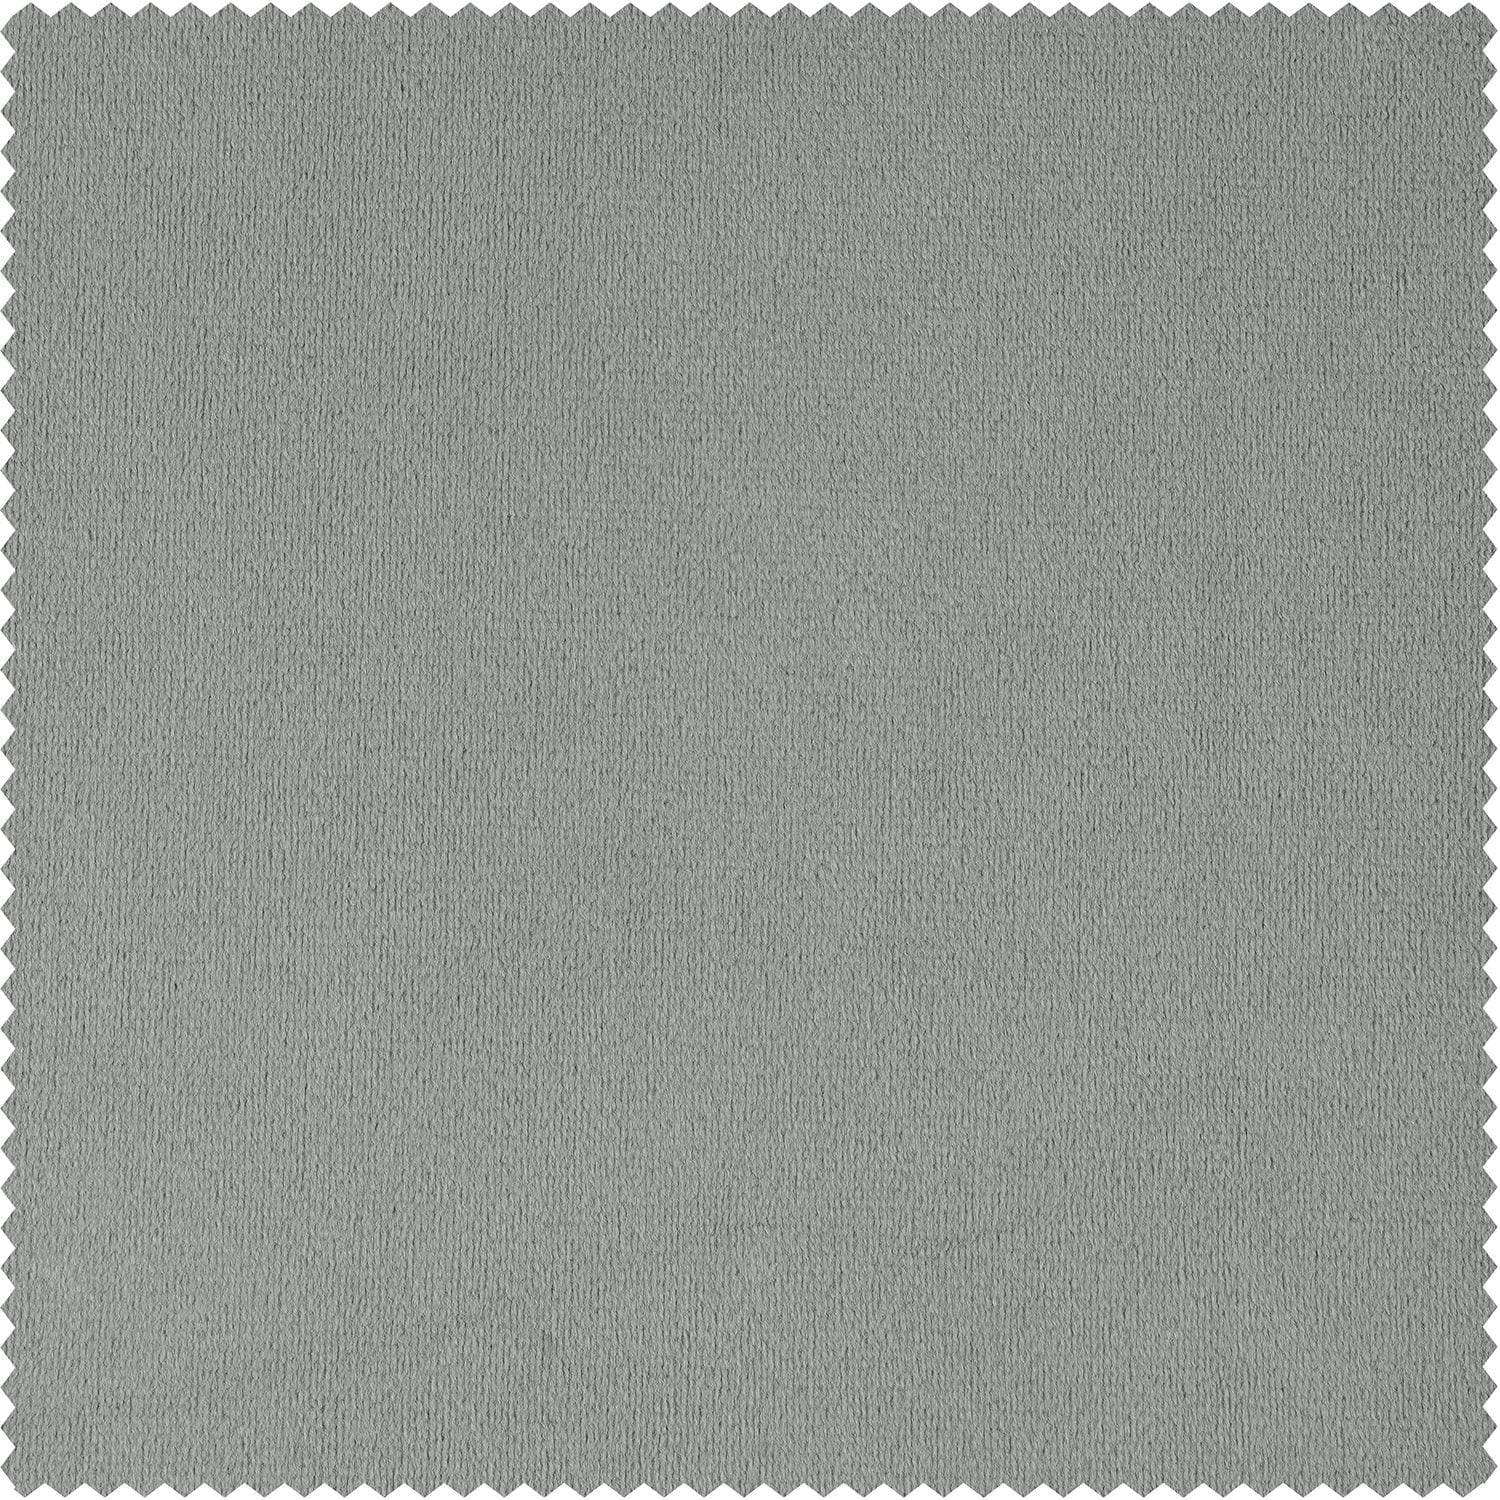 Silver Grey Grommet Signature Velvet Blackout Curtain